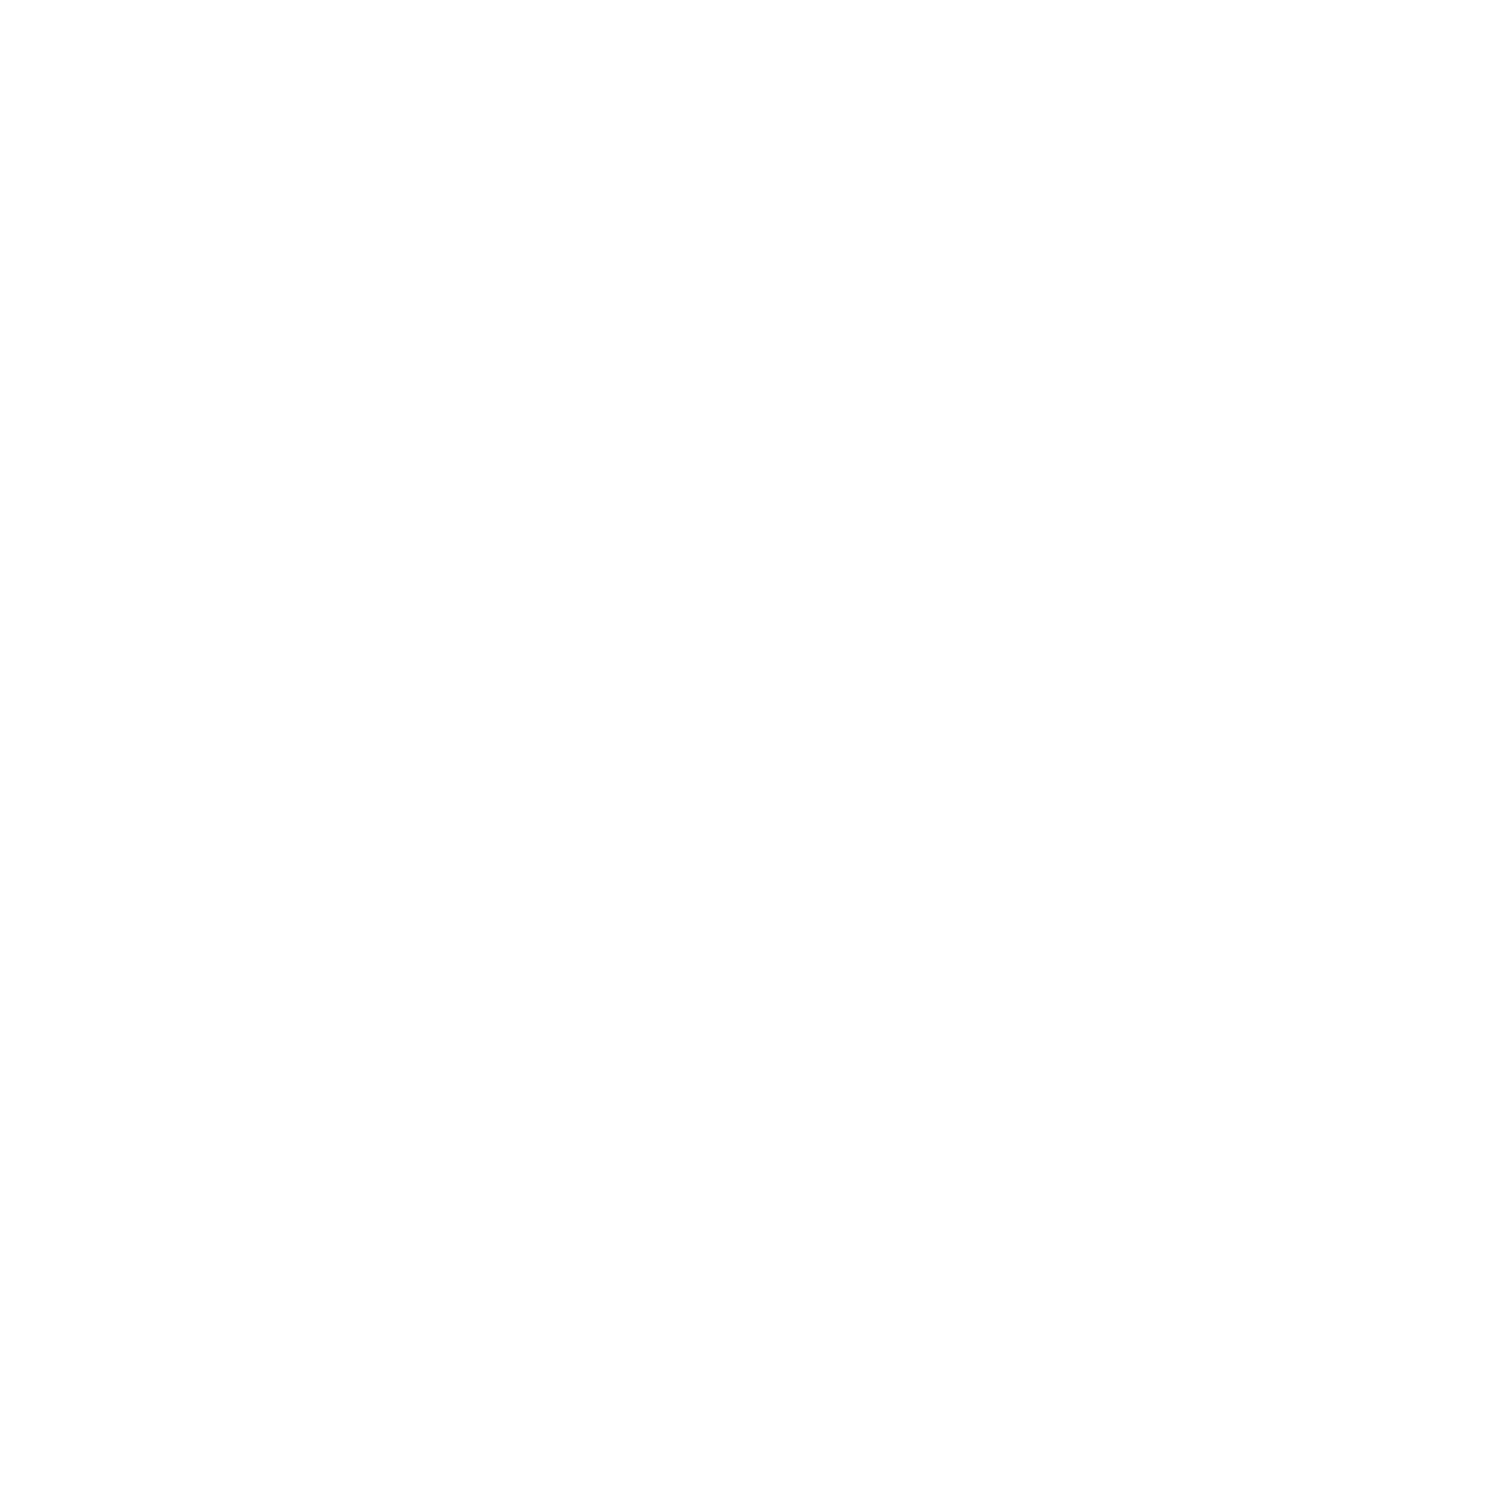 Montana State Parks Americorps logo